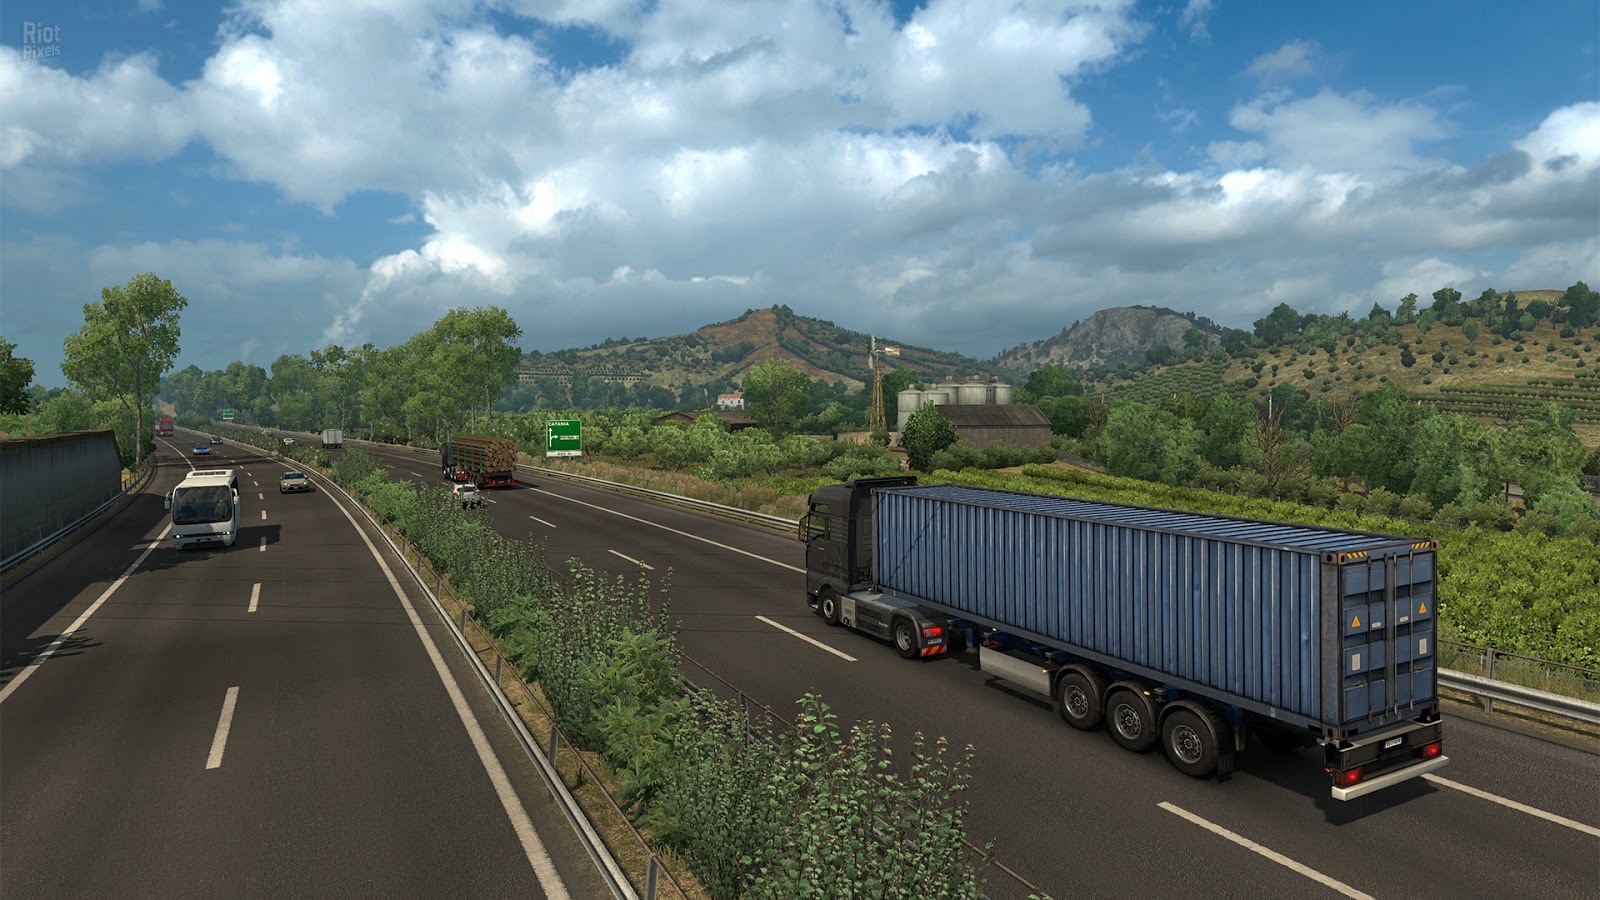 euro truck simulator 2 crack x64